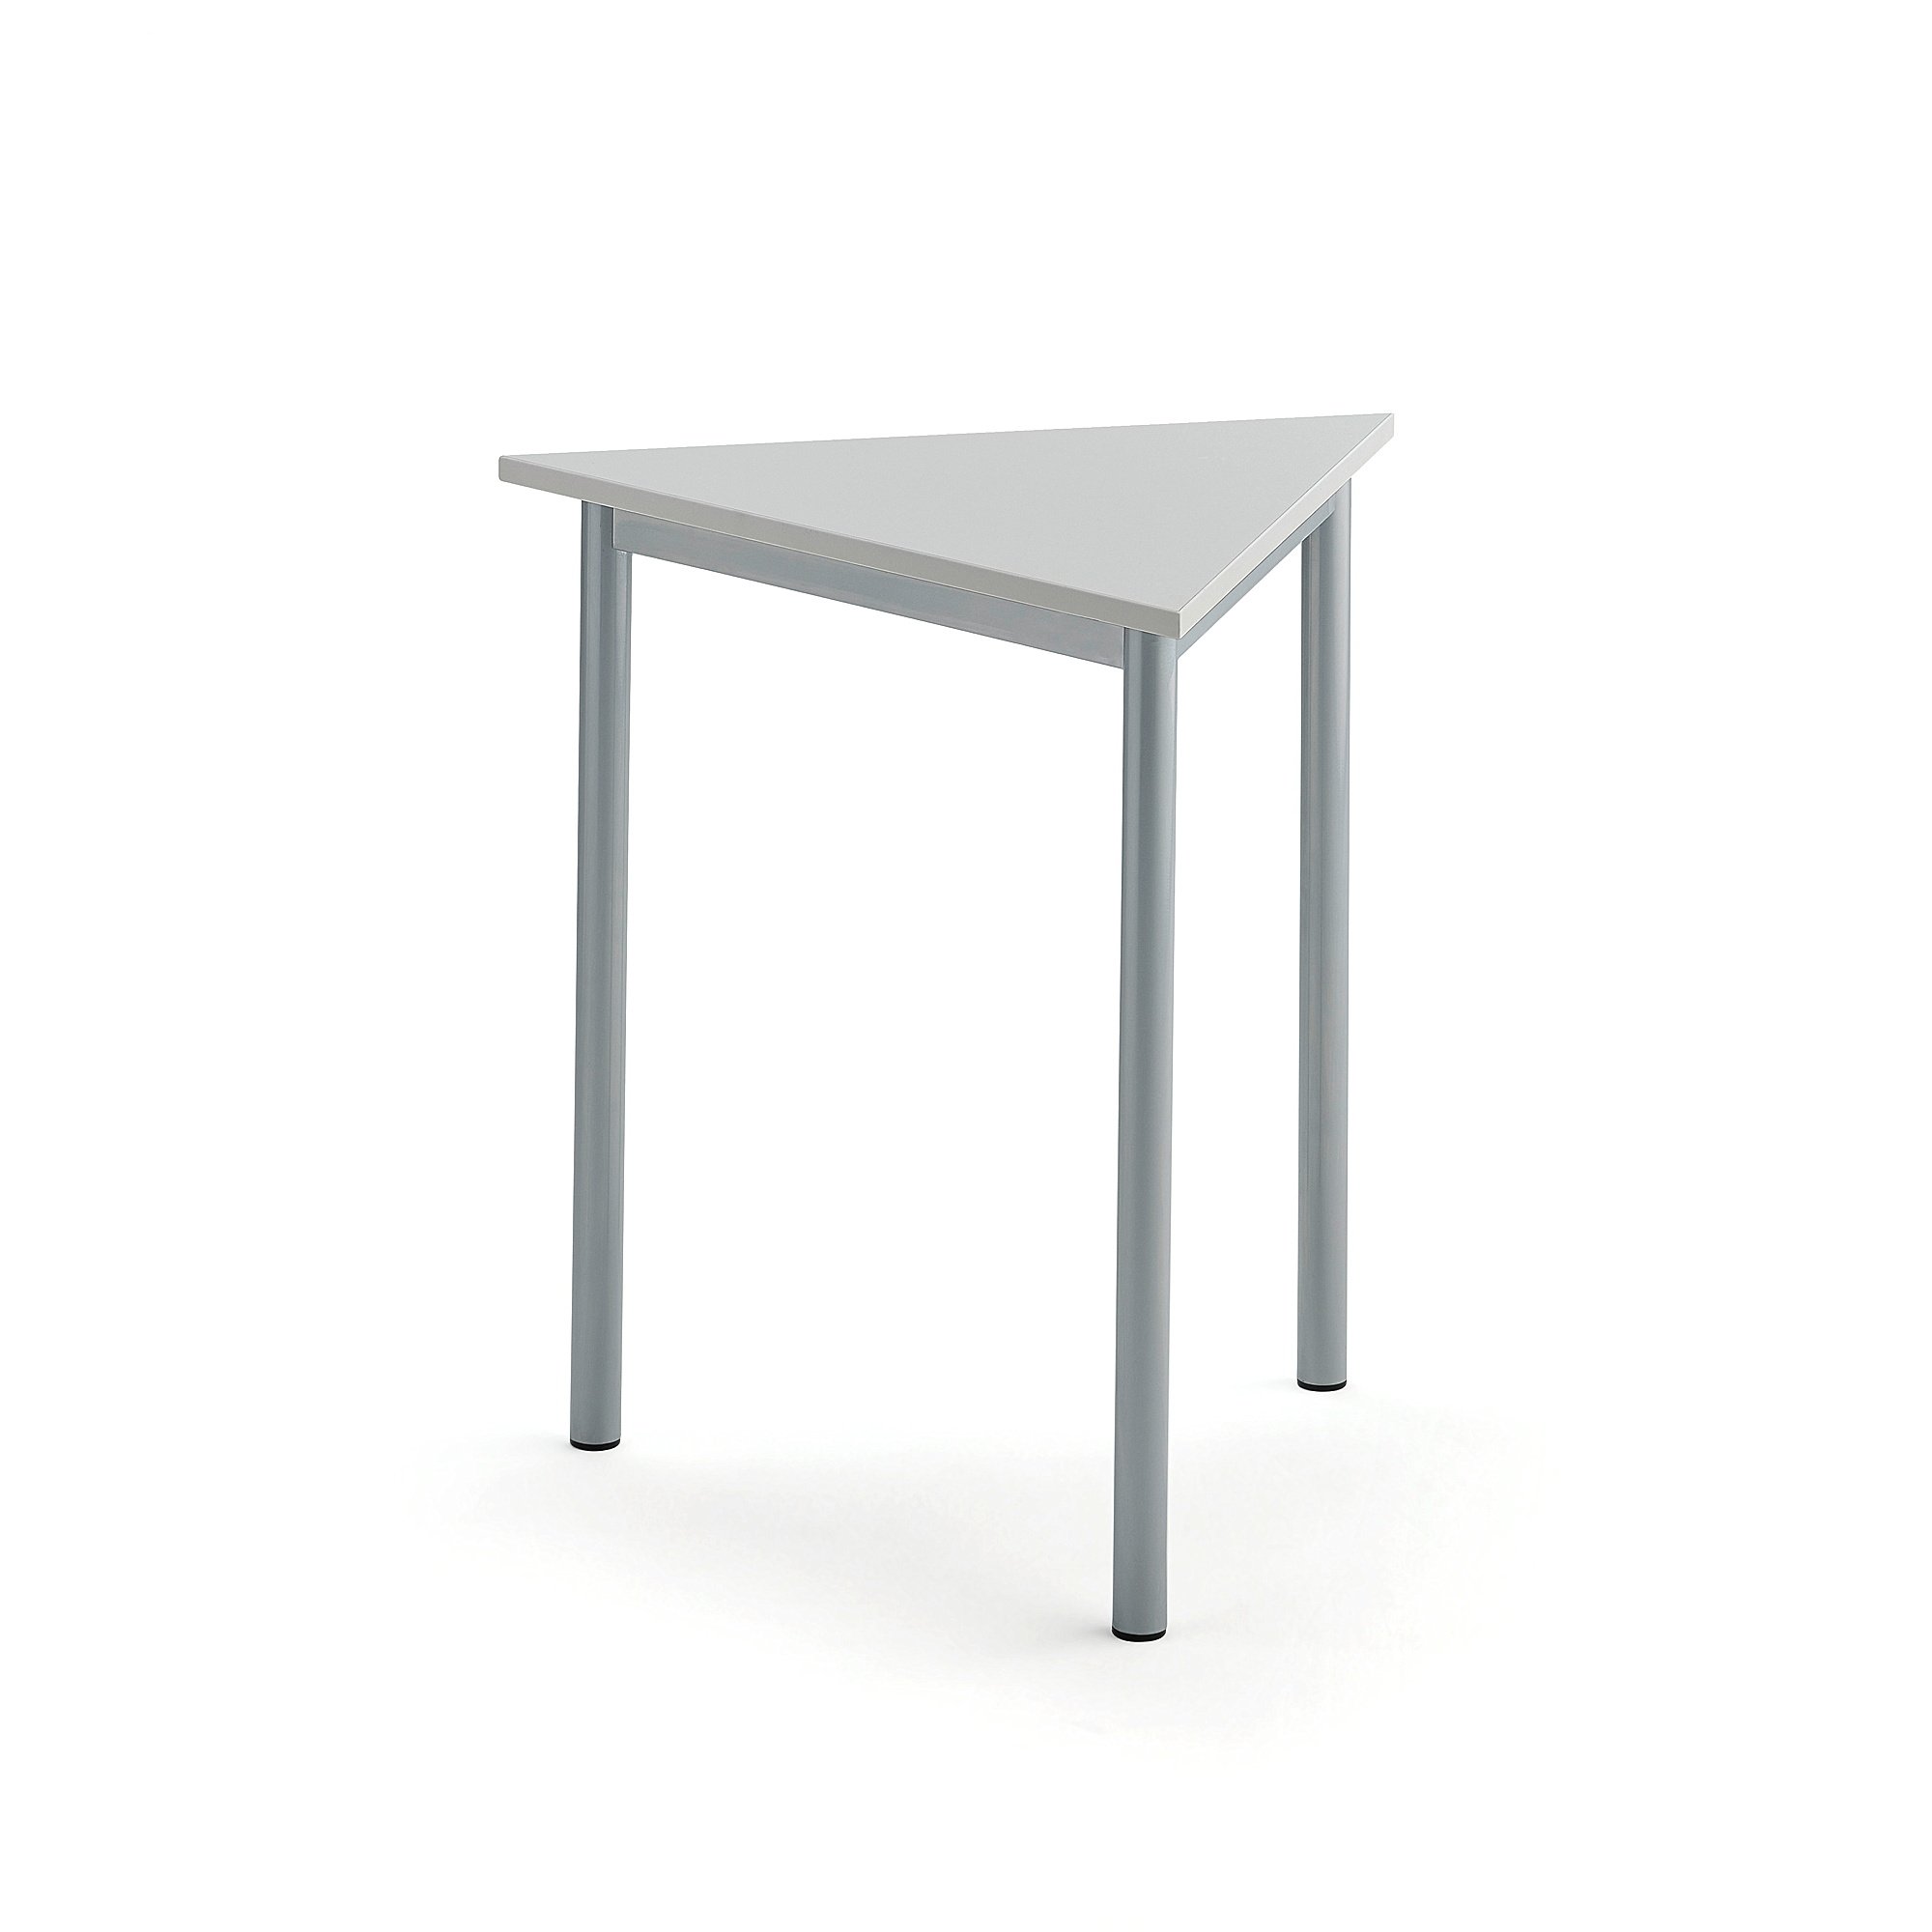 Stůl SONITUS TRIANGEL, 700x700x720 mm, stříbrné nohy, HPL deska tlumící hluk, šedá